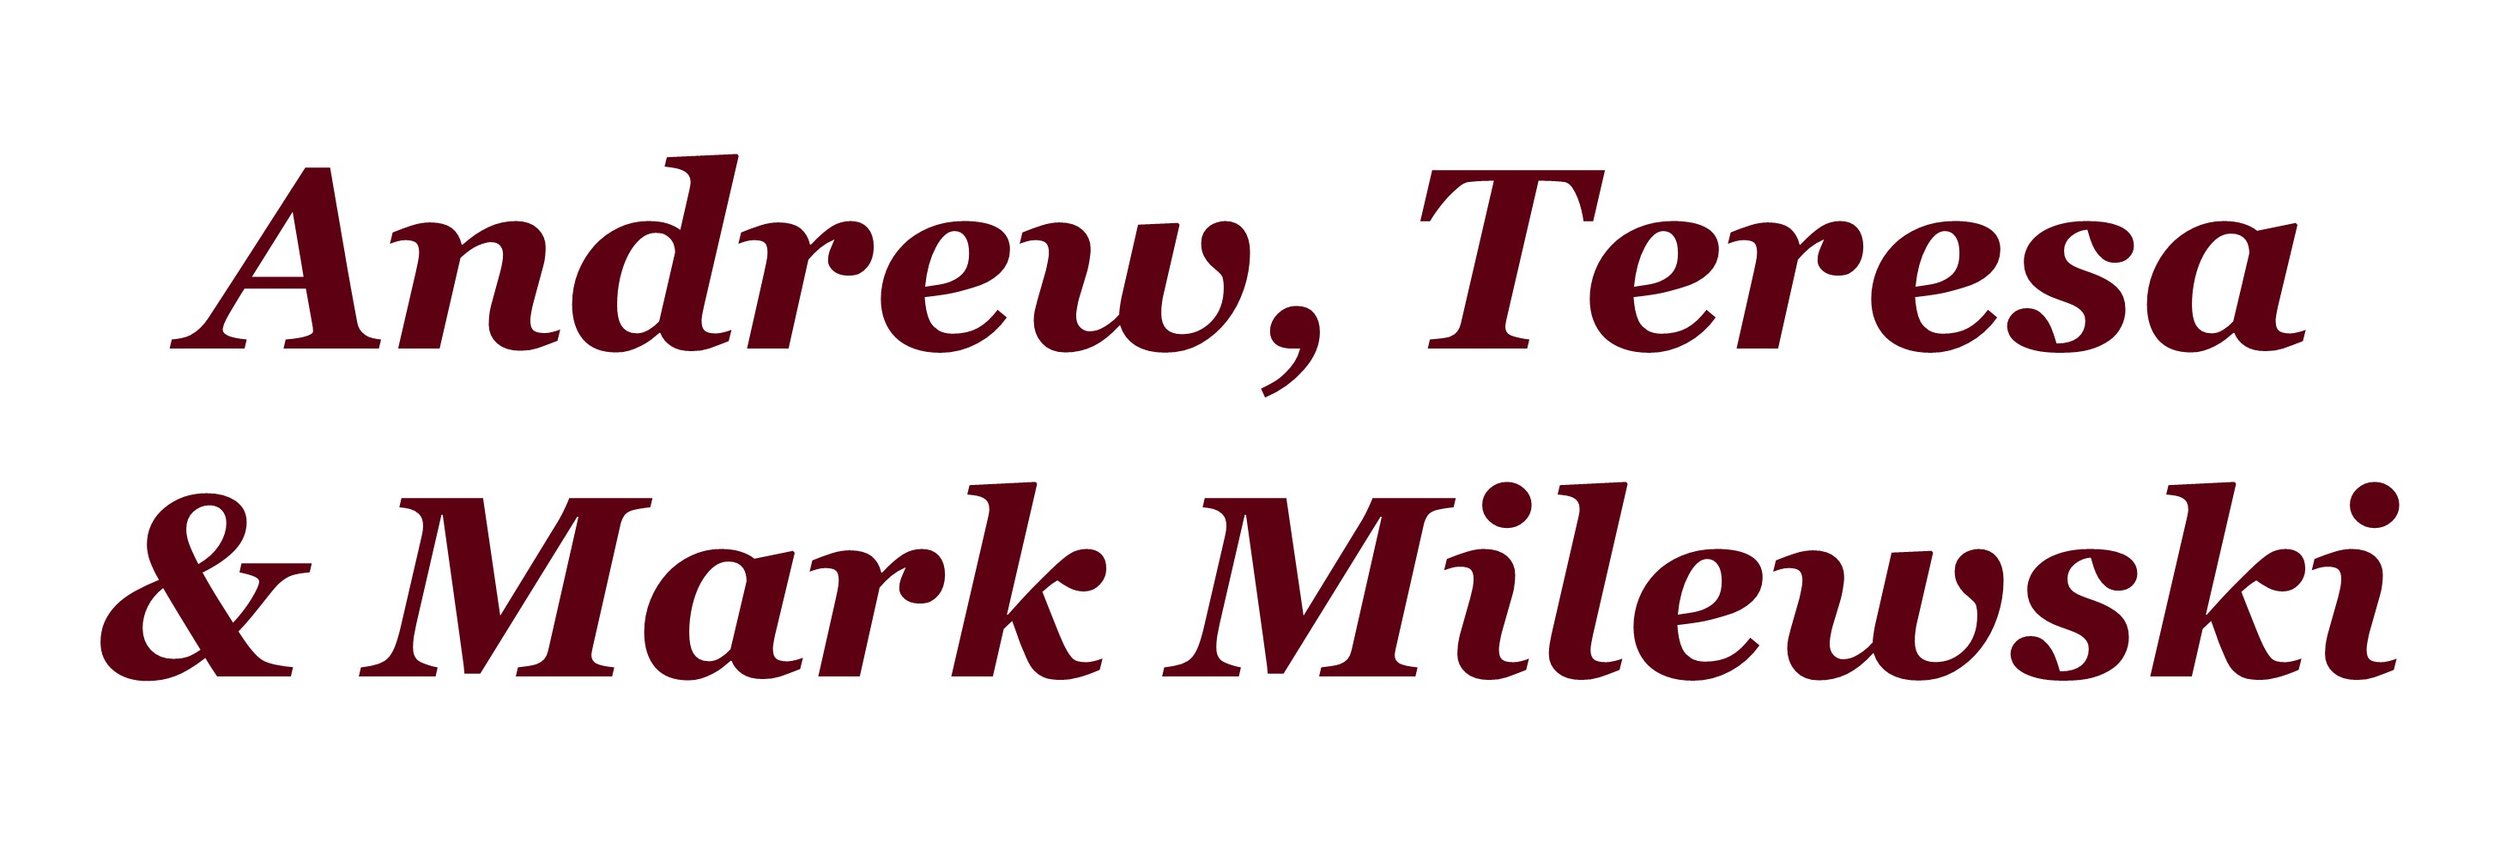 Milewski Family logo.jpg